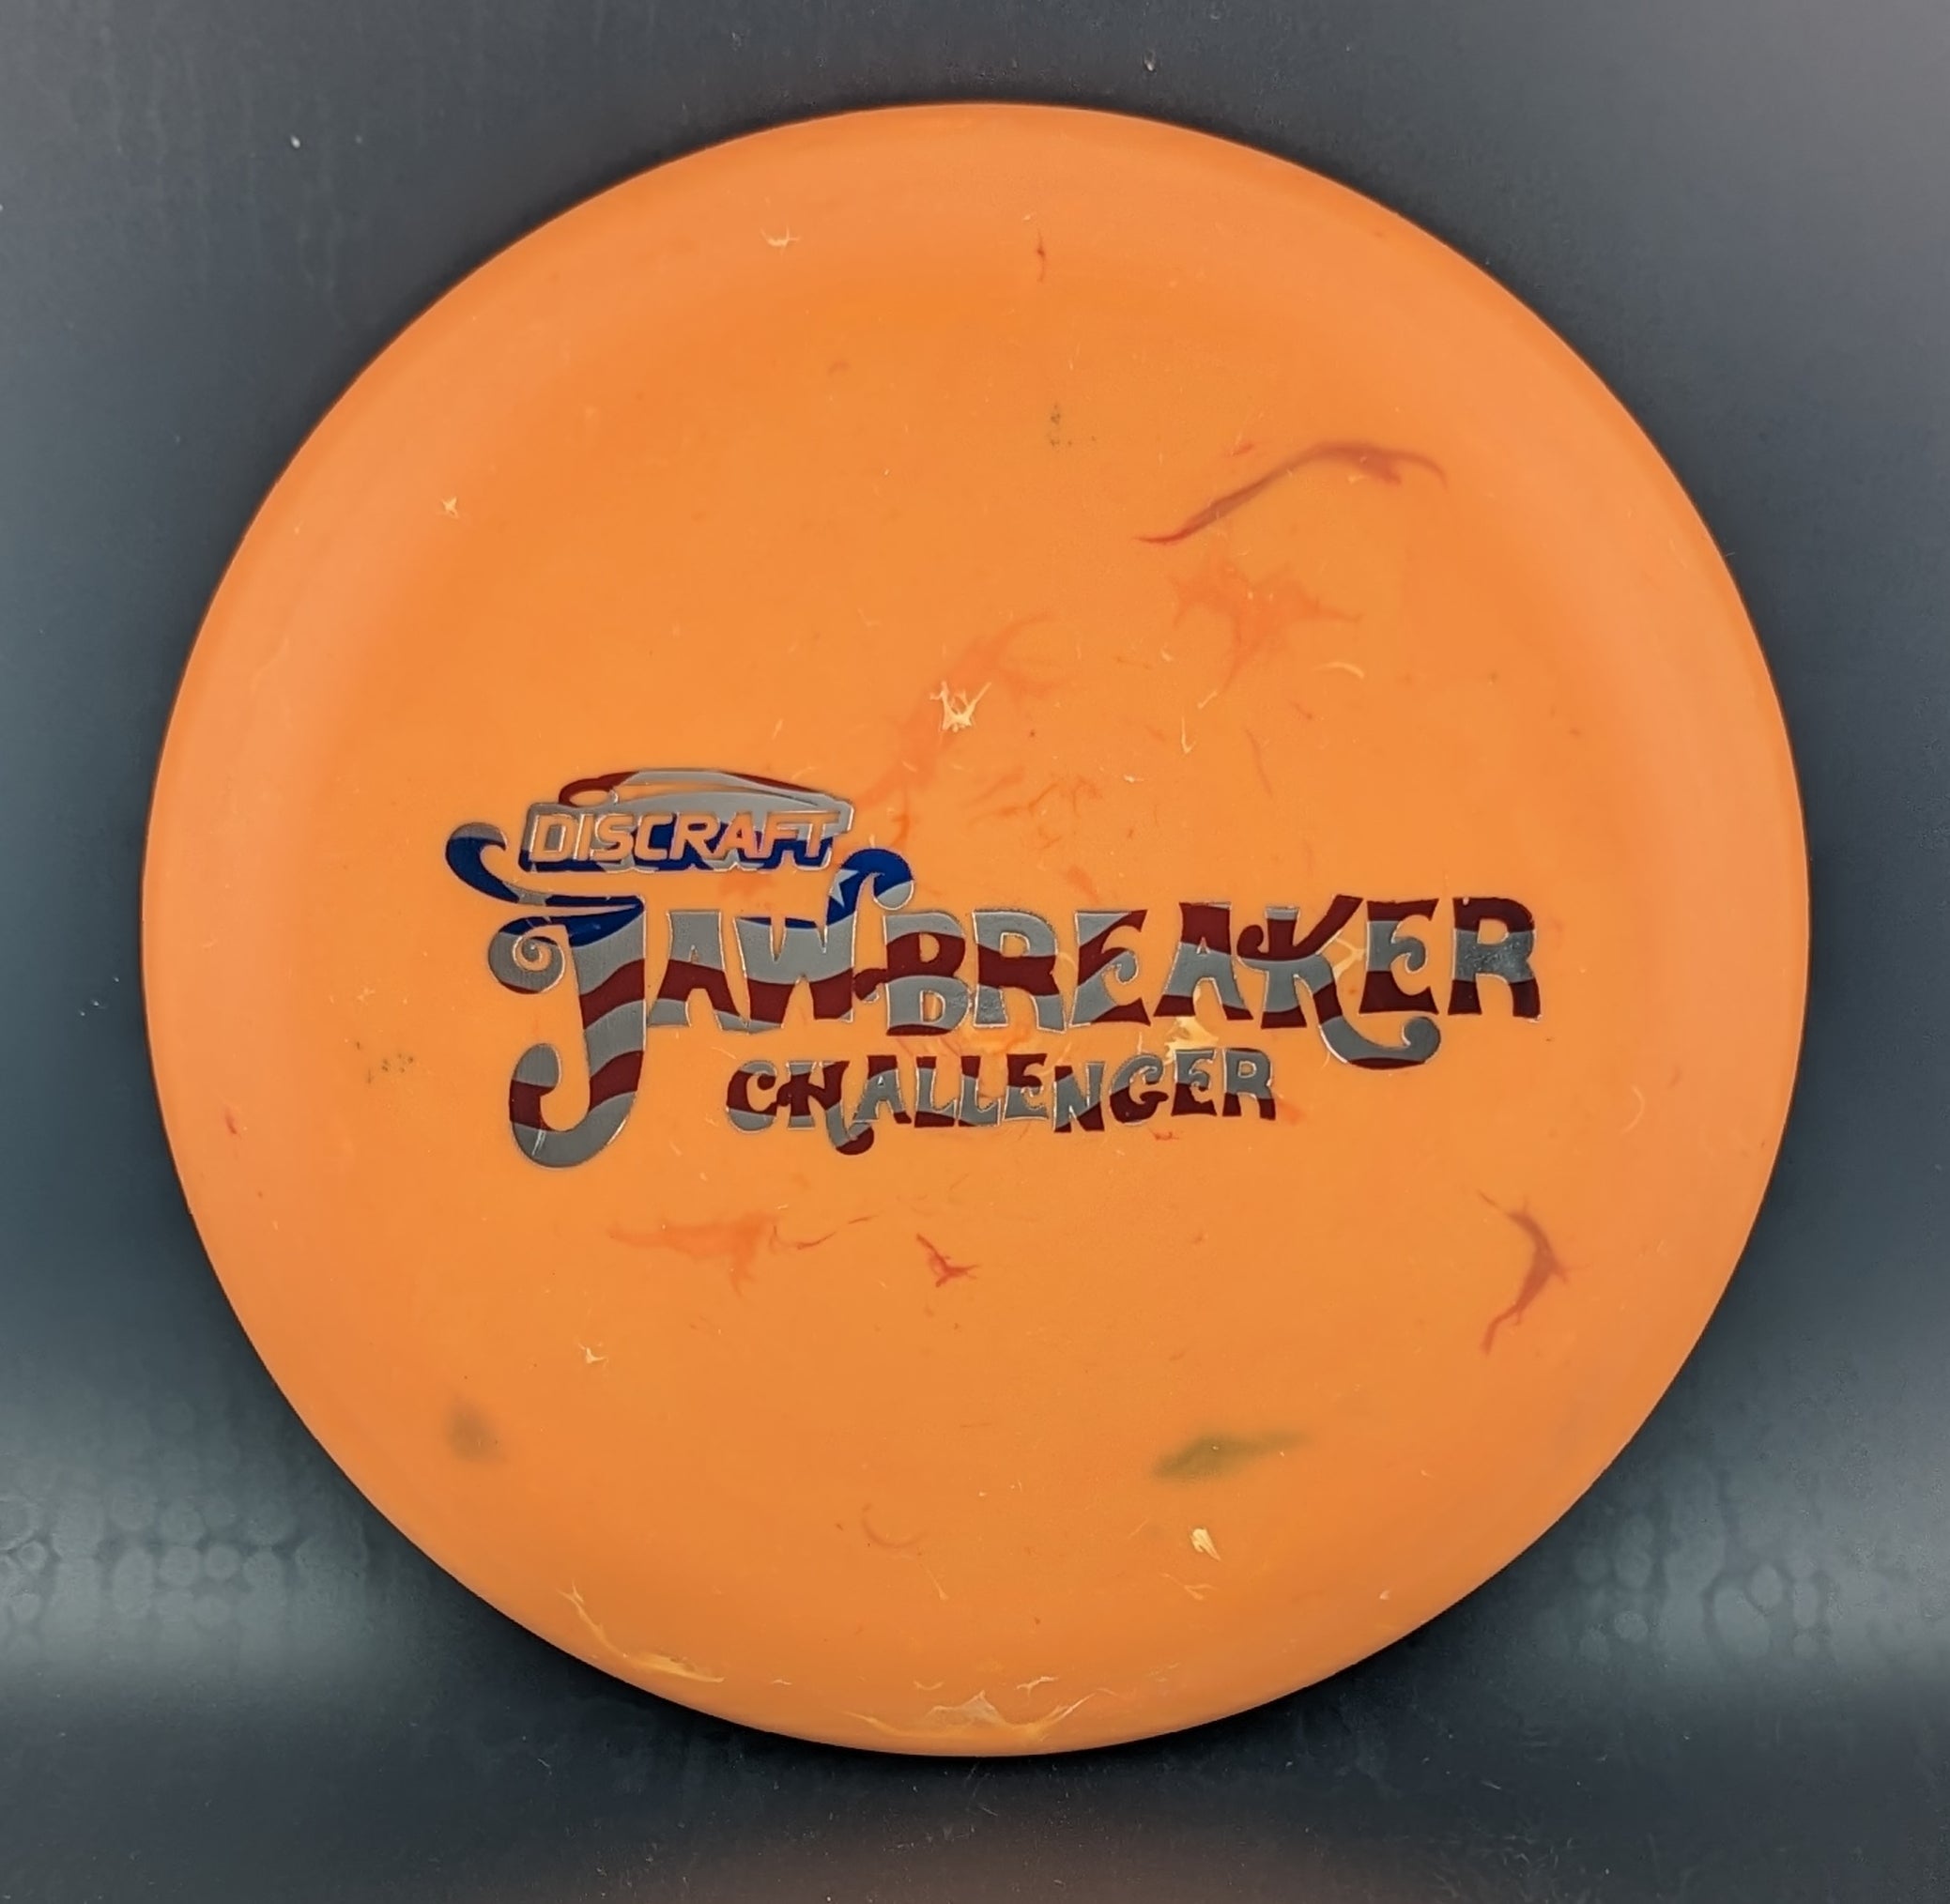 Jawbreaker Challenger - 0